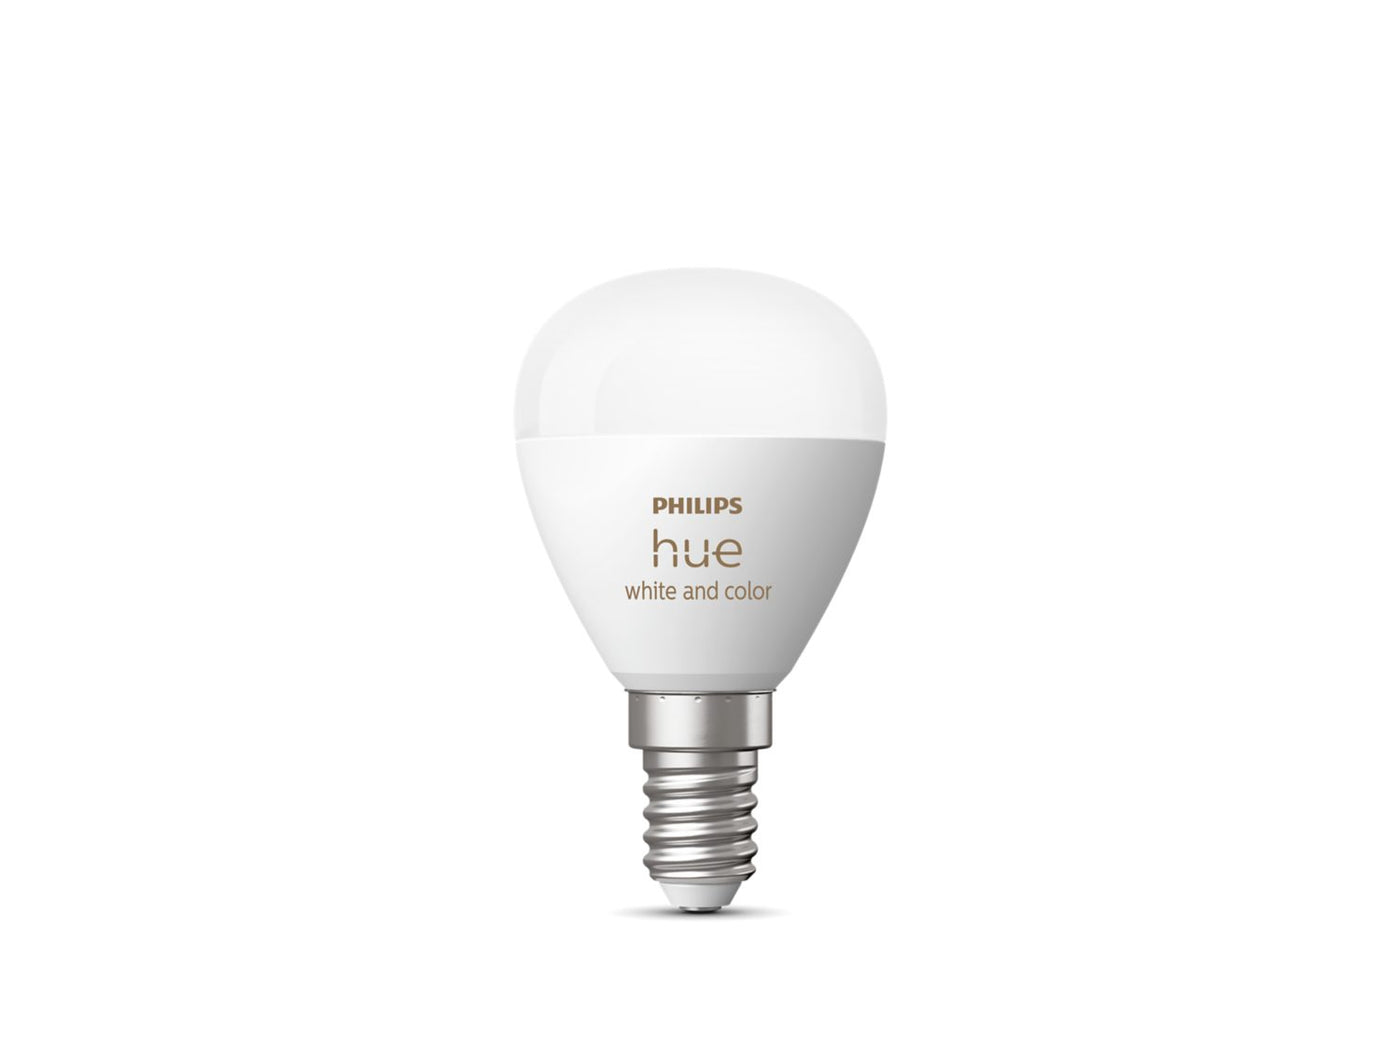 Hue White and Color Ambiance Lustre – E14 smart bulb